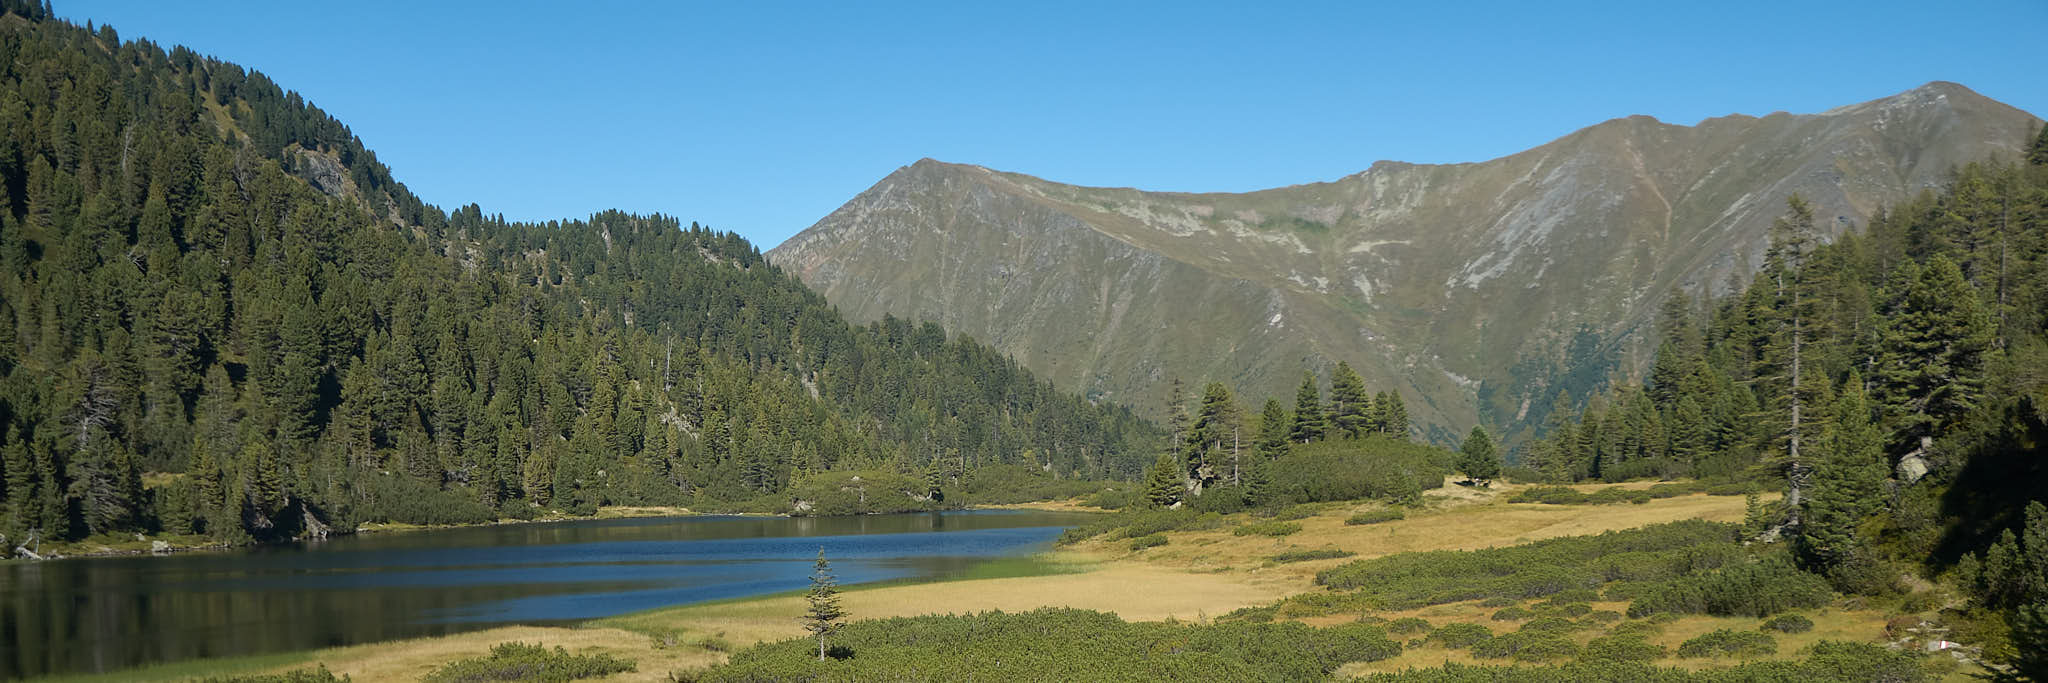 Zwiefler mountain lake